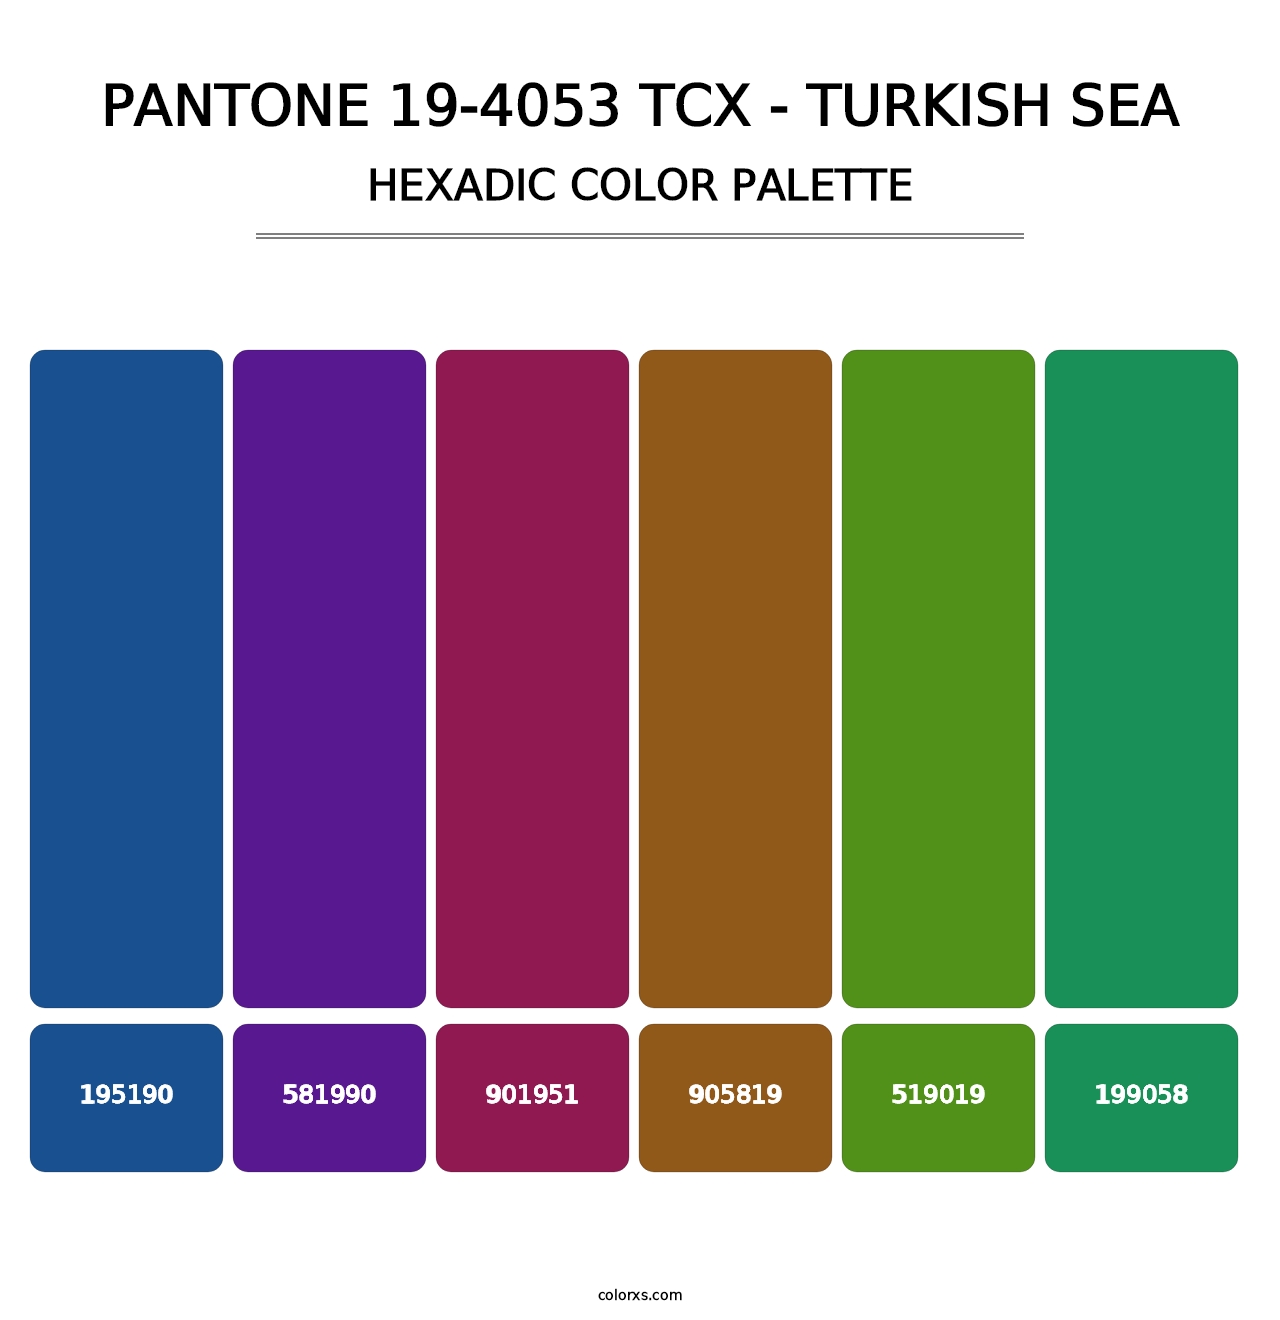 PANTONE 19-4053 TCX - Turkish Sea - Hexadic Color Palette